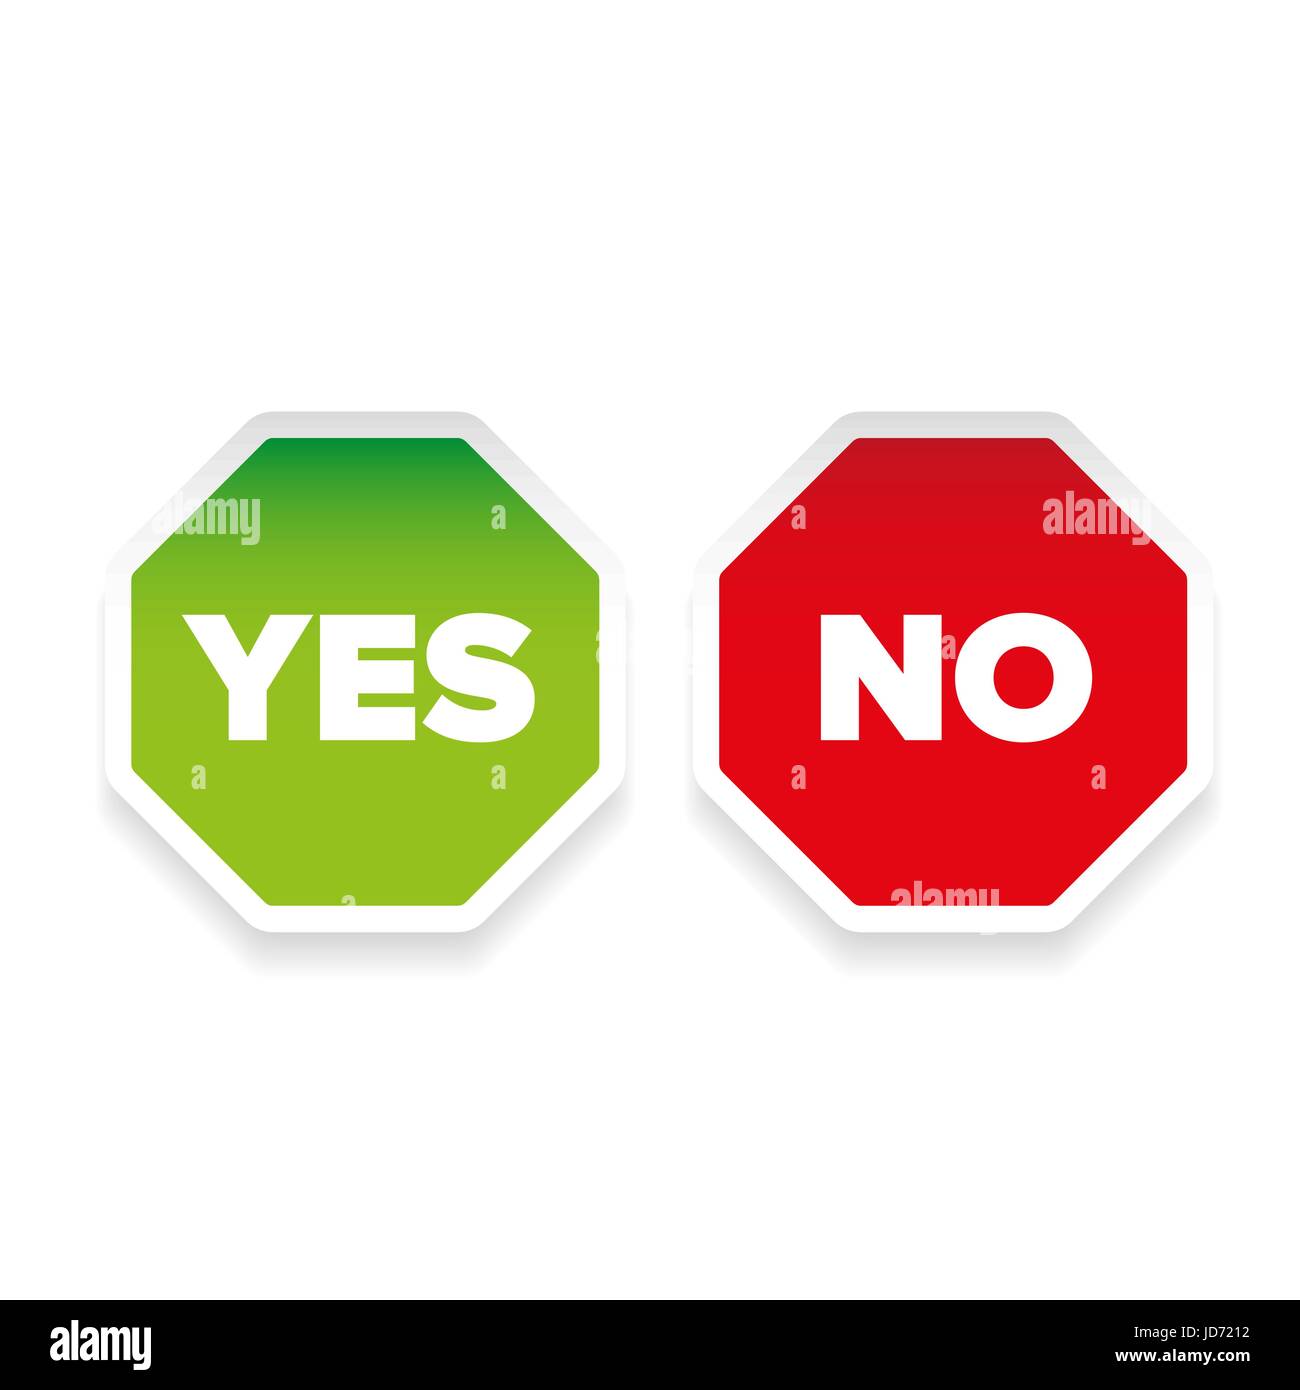 https://c8.alamy.com/comp/JD7212/yes-no-sign-sticker-set-JD7212.jpg